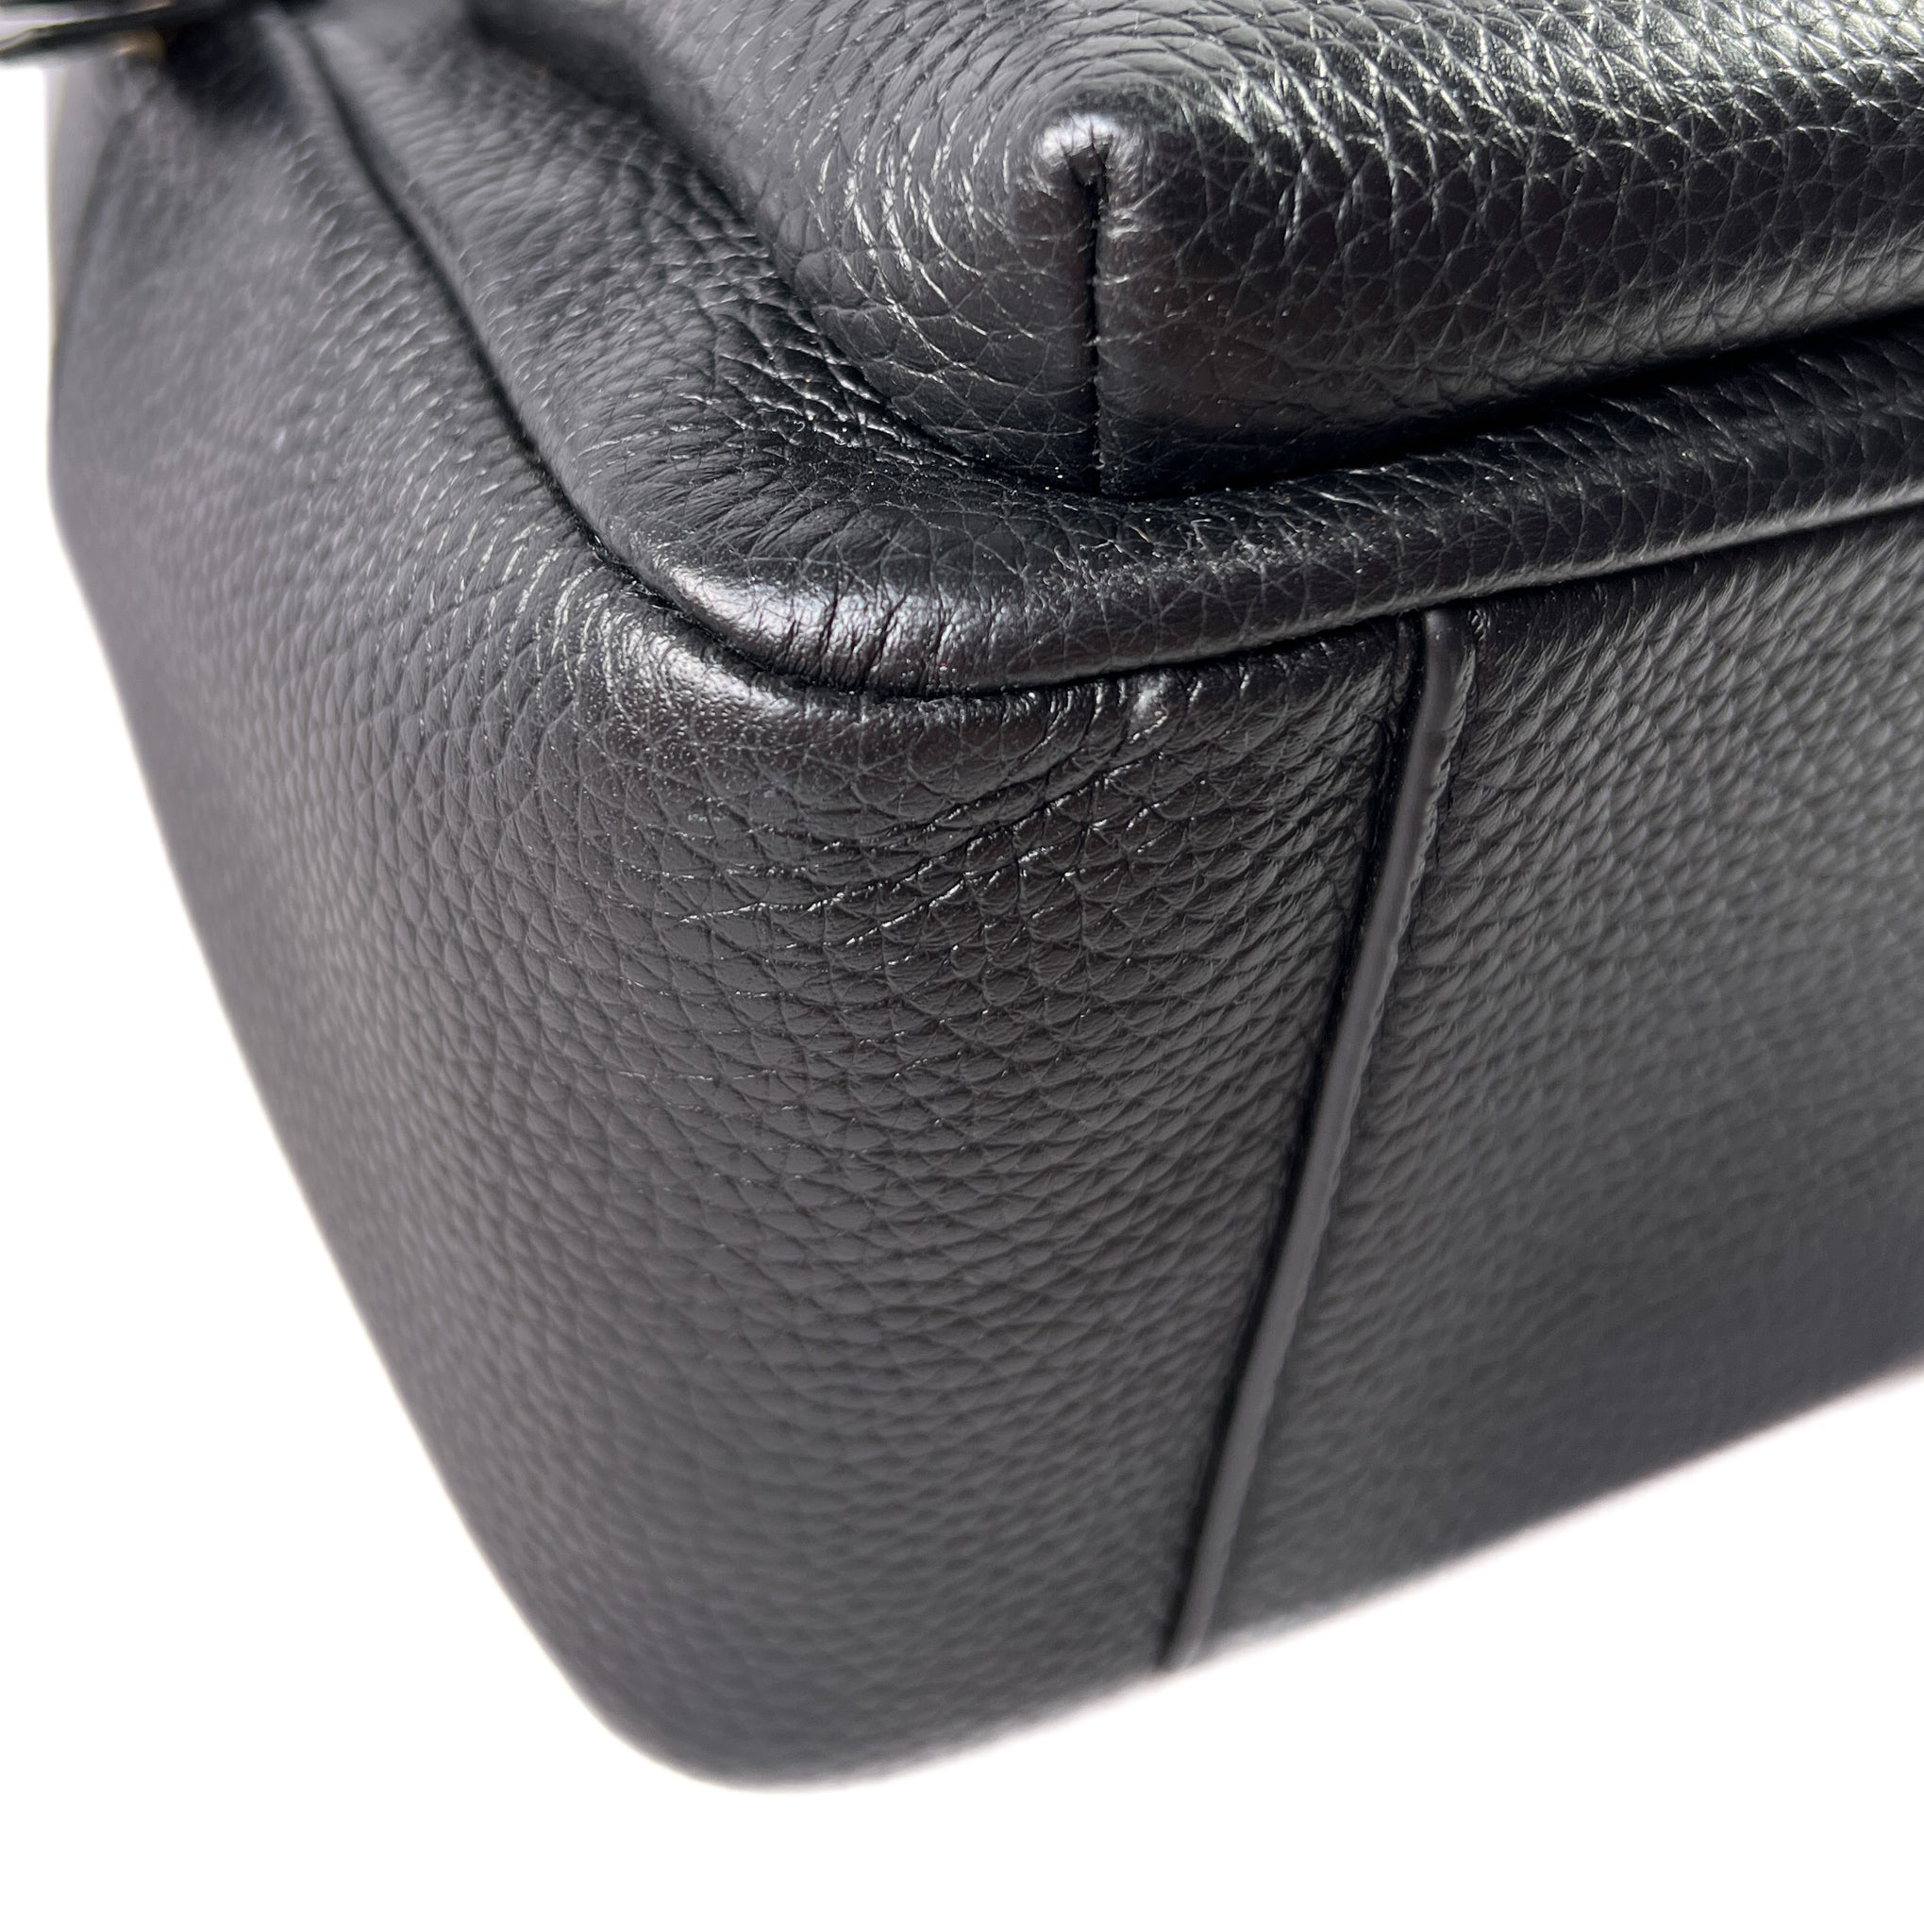 New Tory Burch Thea mini backpack leather